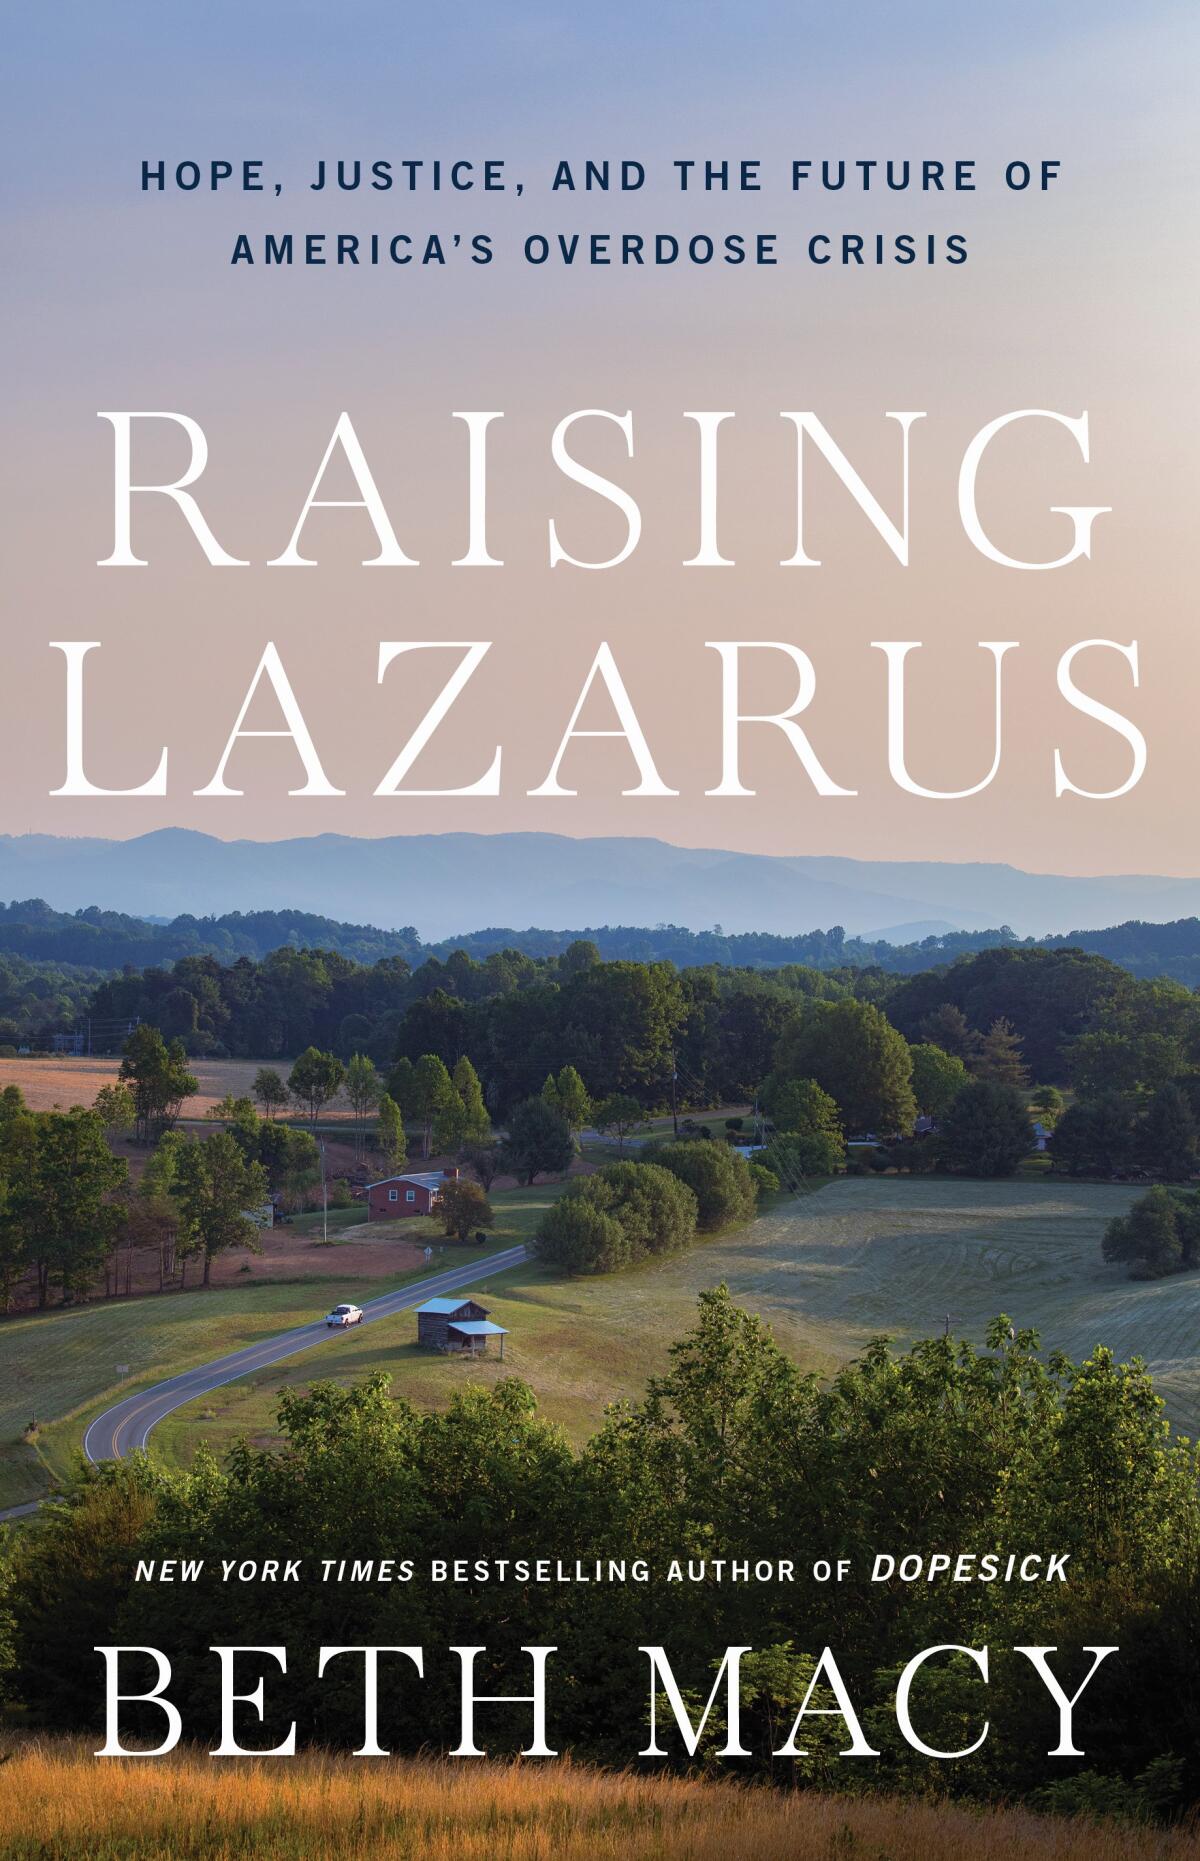 "Raising Lazarus," by Beth Macy